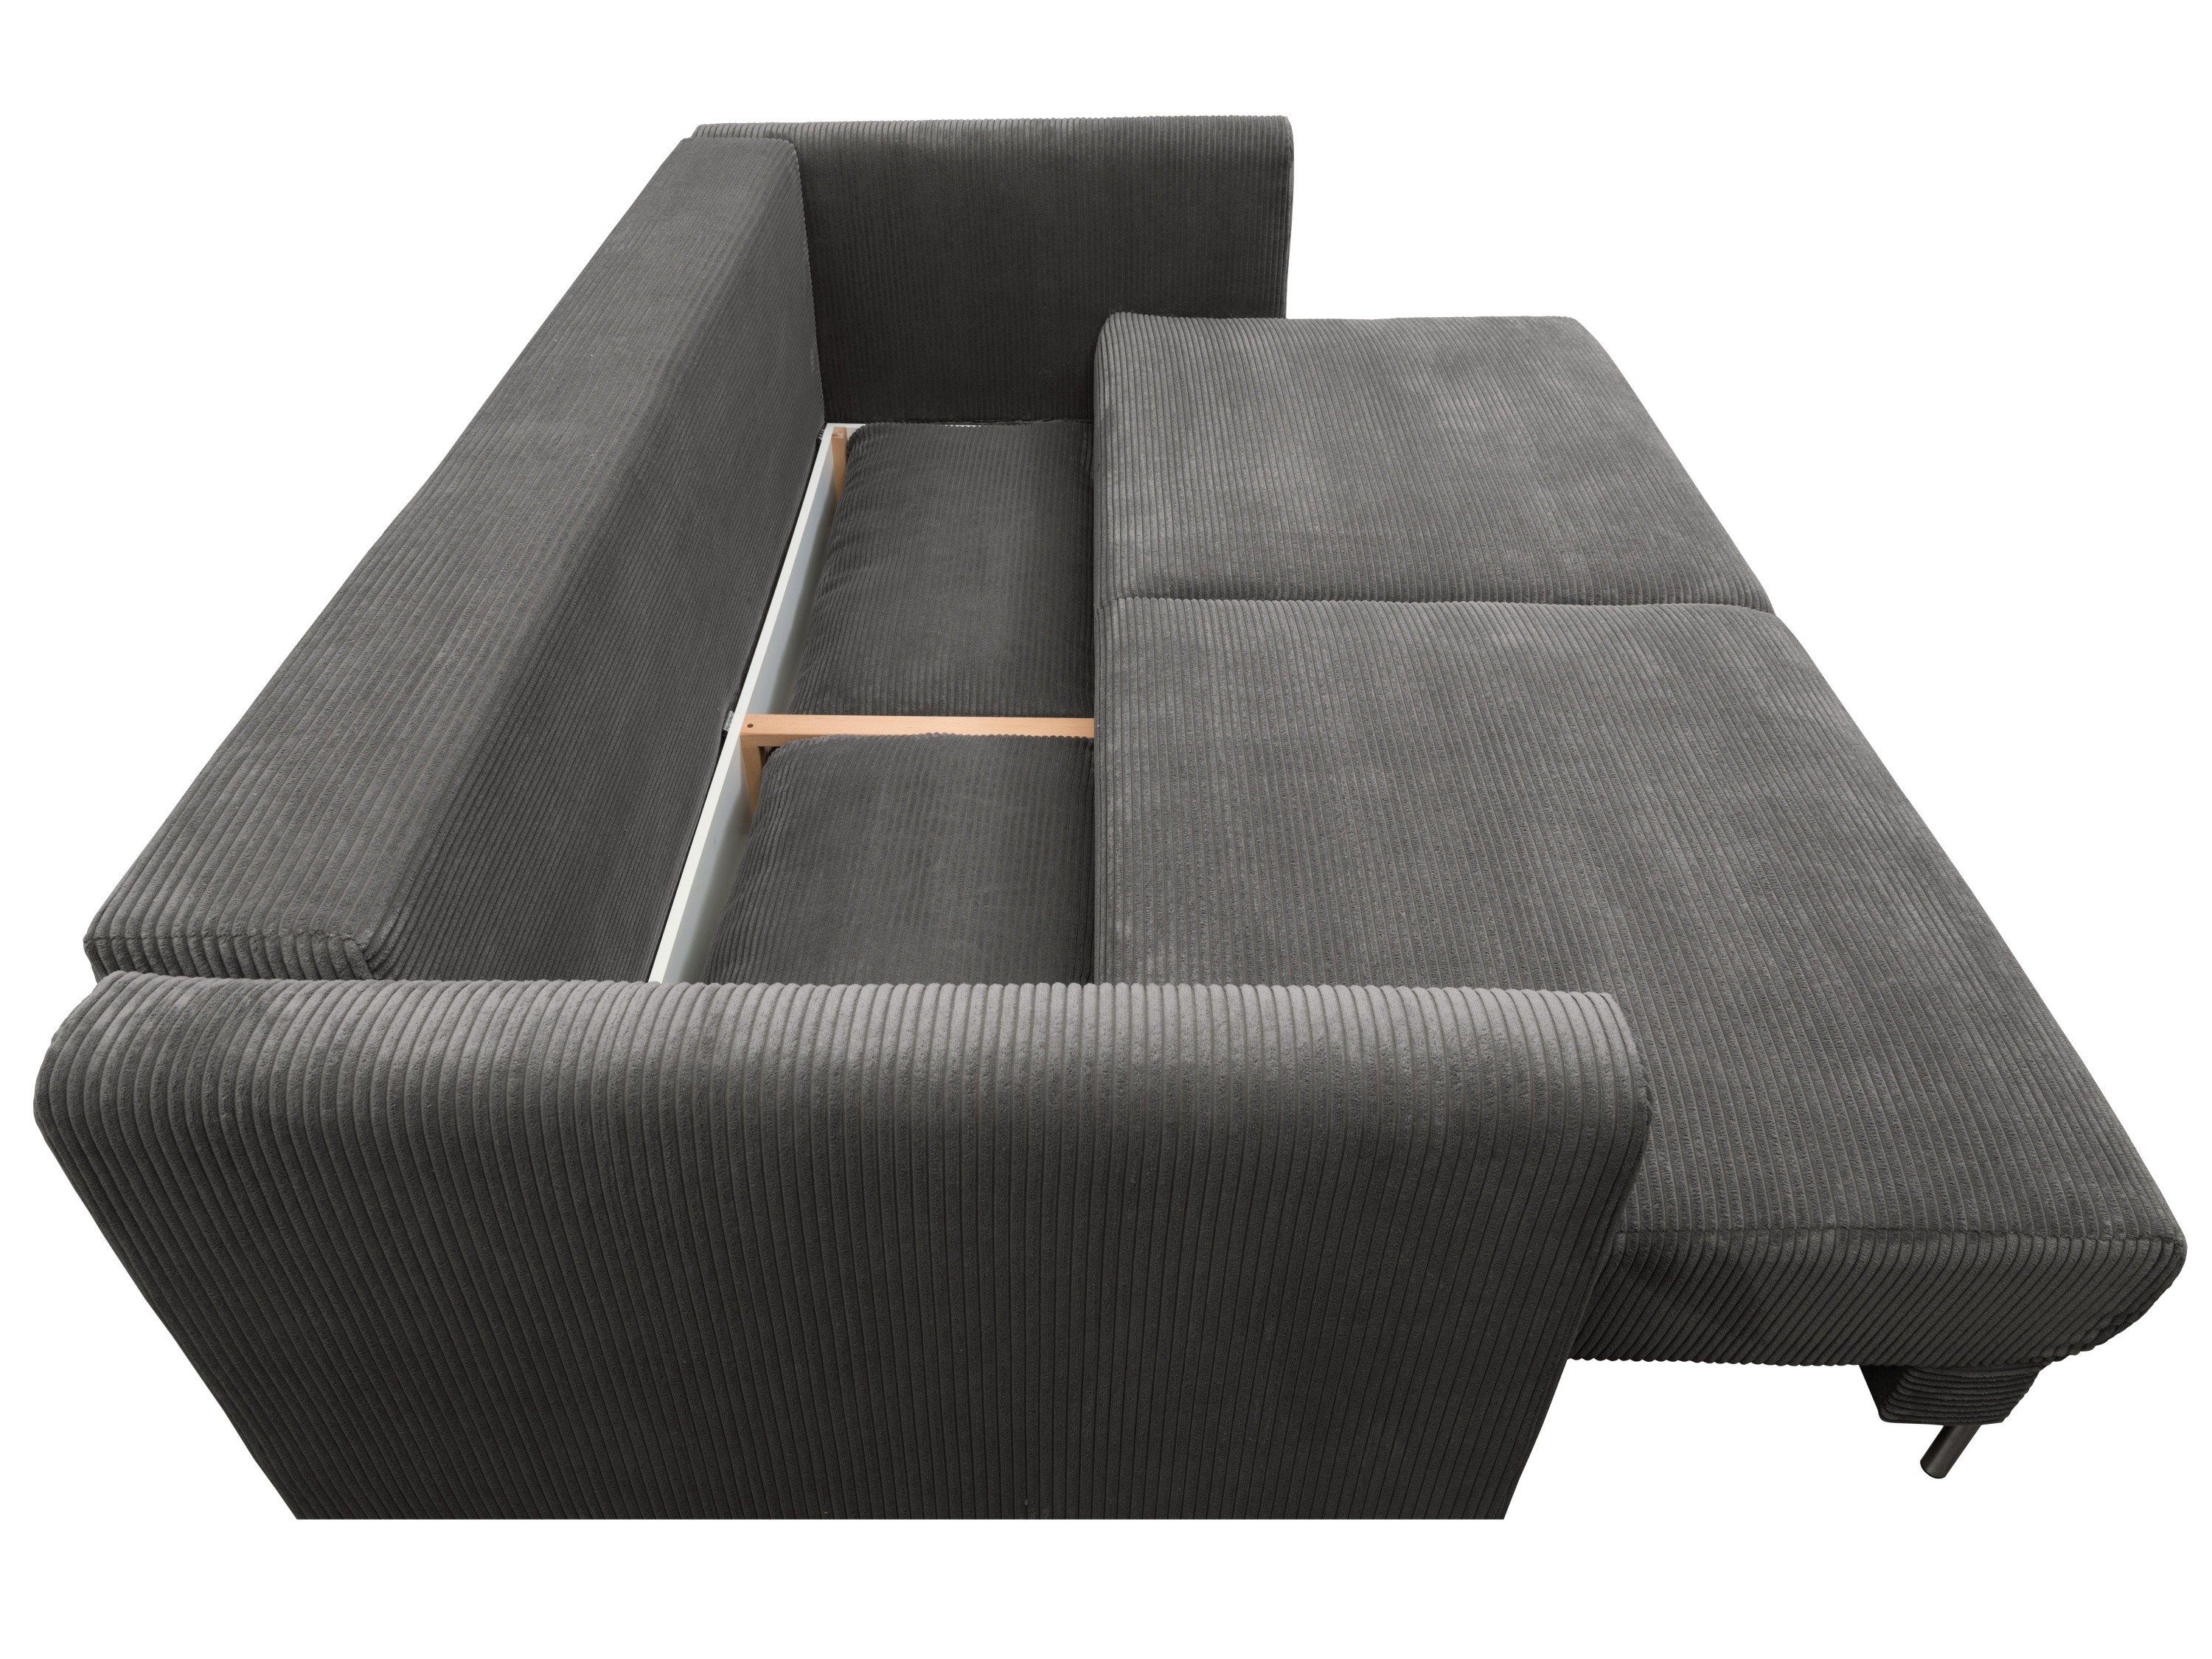 Kaltschaumpolsterung und Kaltschaumpolsterung Möbel Bettfunktion, mit Dich Rico, Cord Sofa Schlafsofa Cordbezug, für Premium